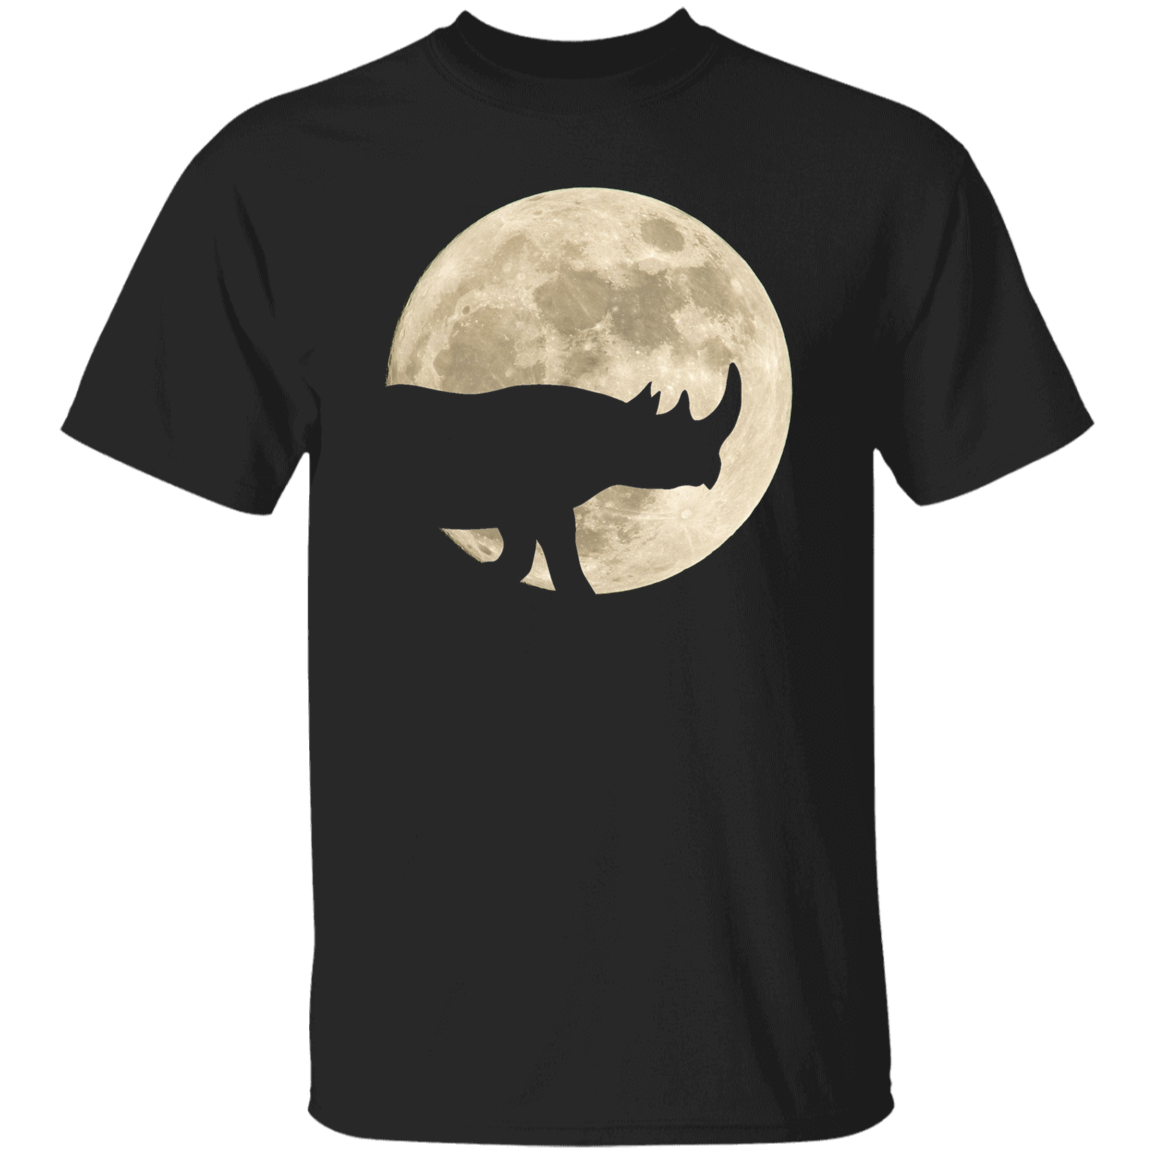 Rhino Moon - T-shirts, Hoodies and Sweatshirts